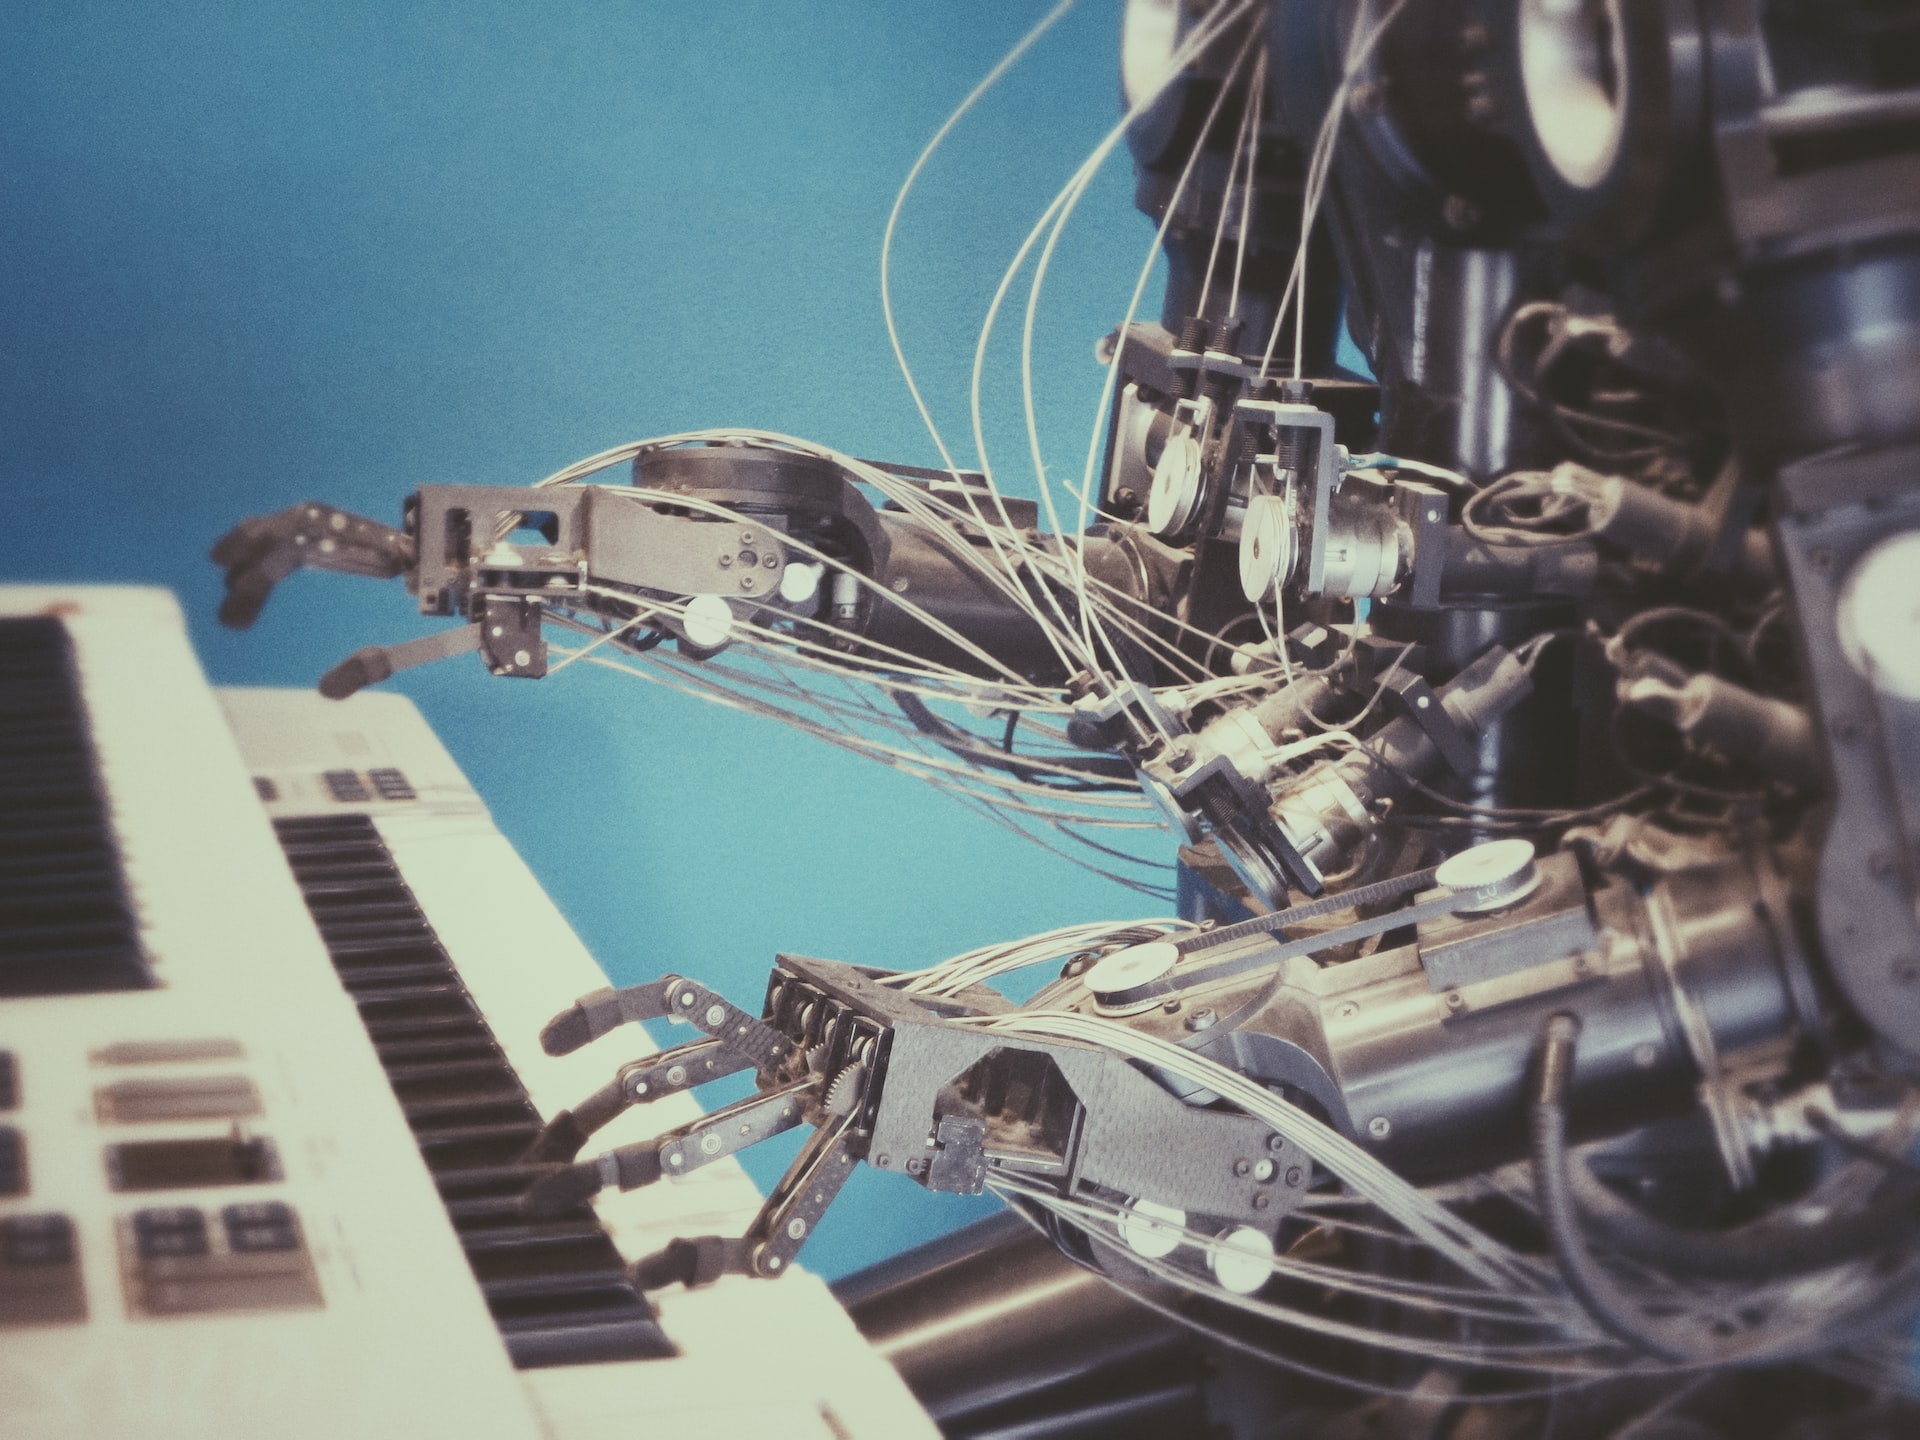 Robot AI plays keyboard